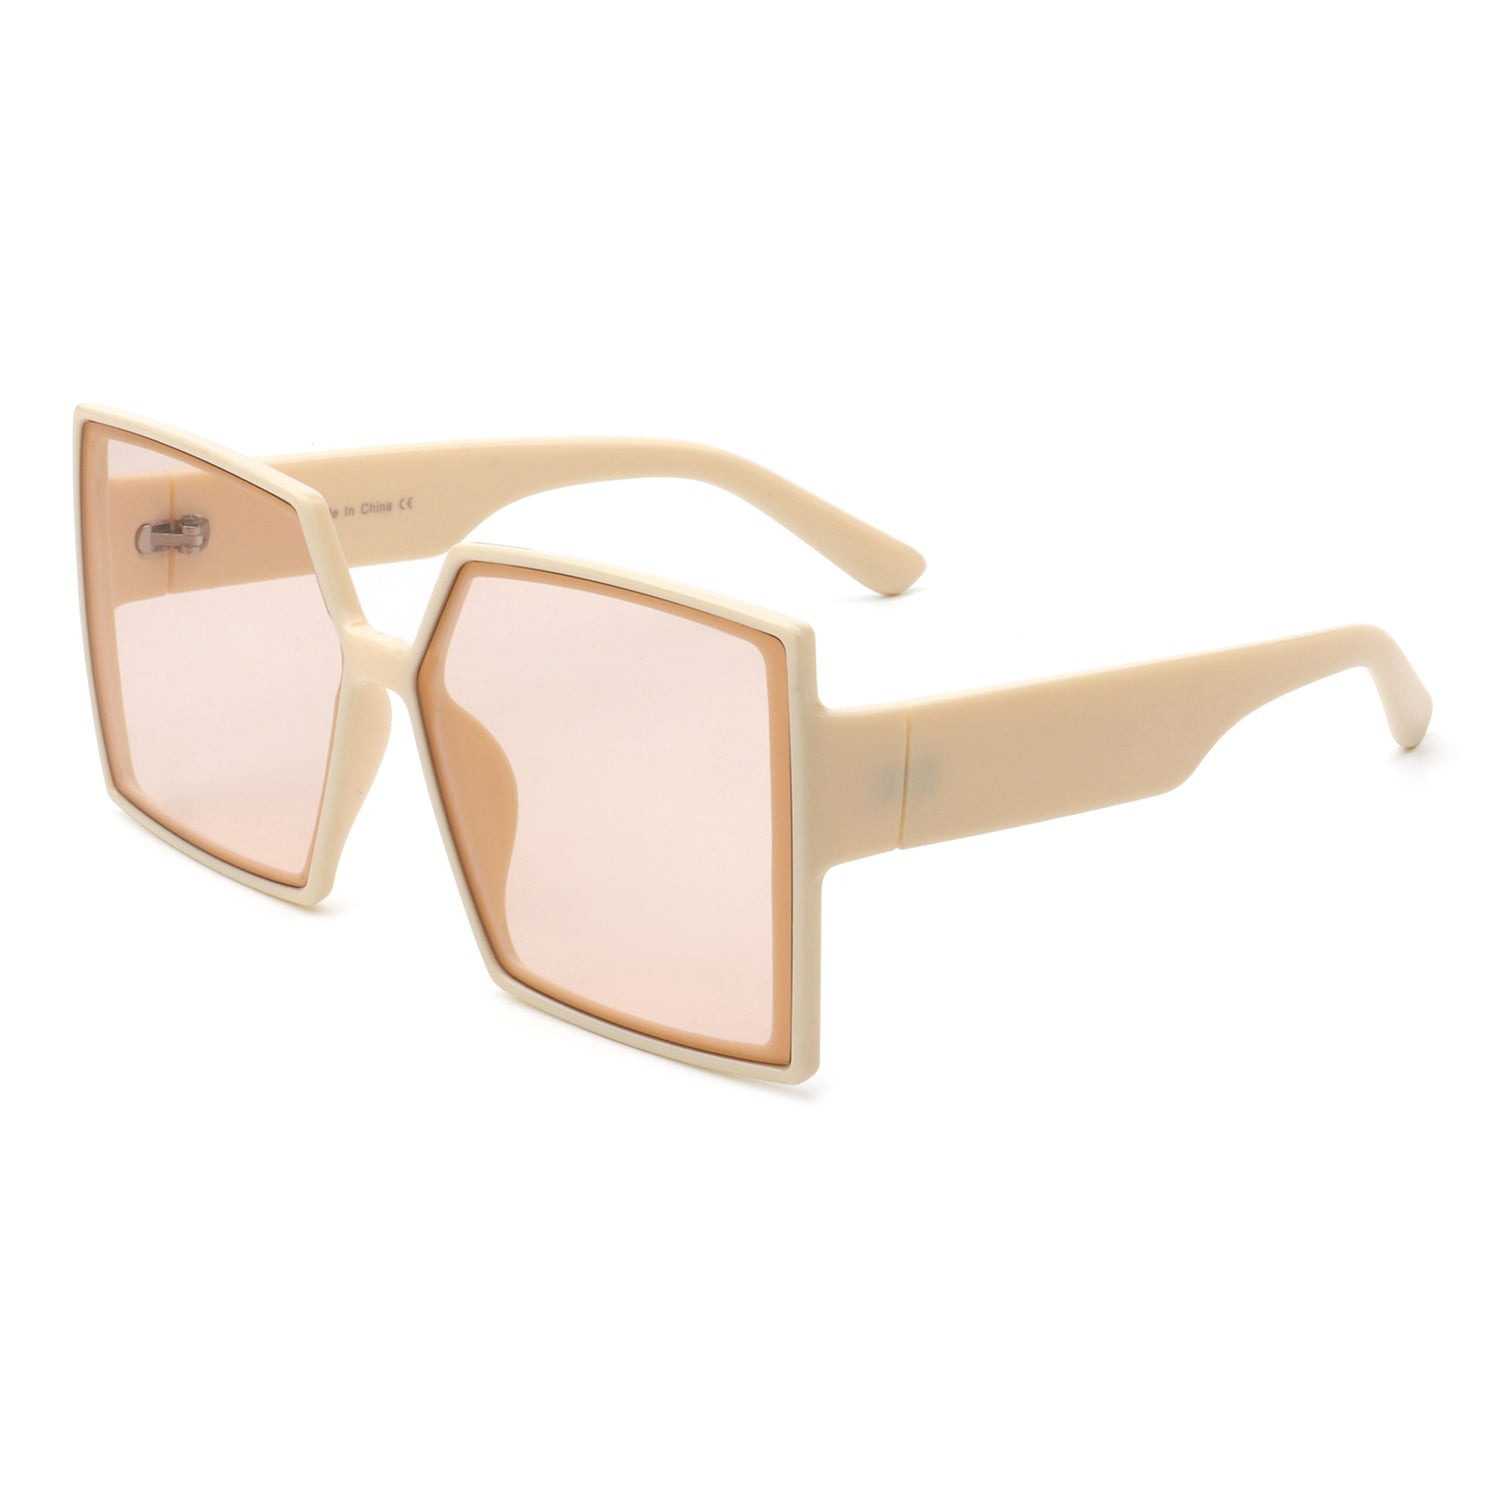 S1186 - Women Square Flat Top Large Oversize Fashion Sunglasses